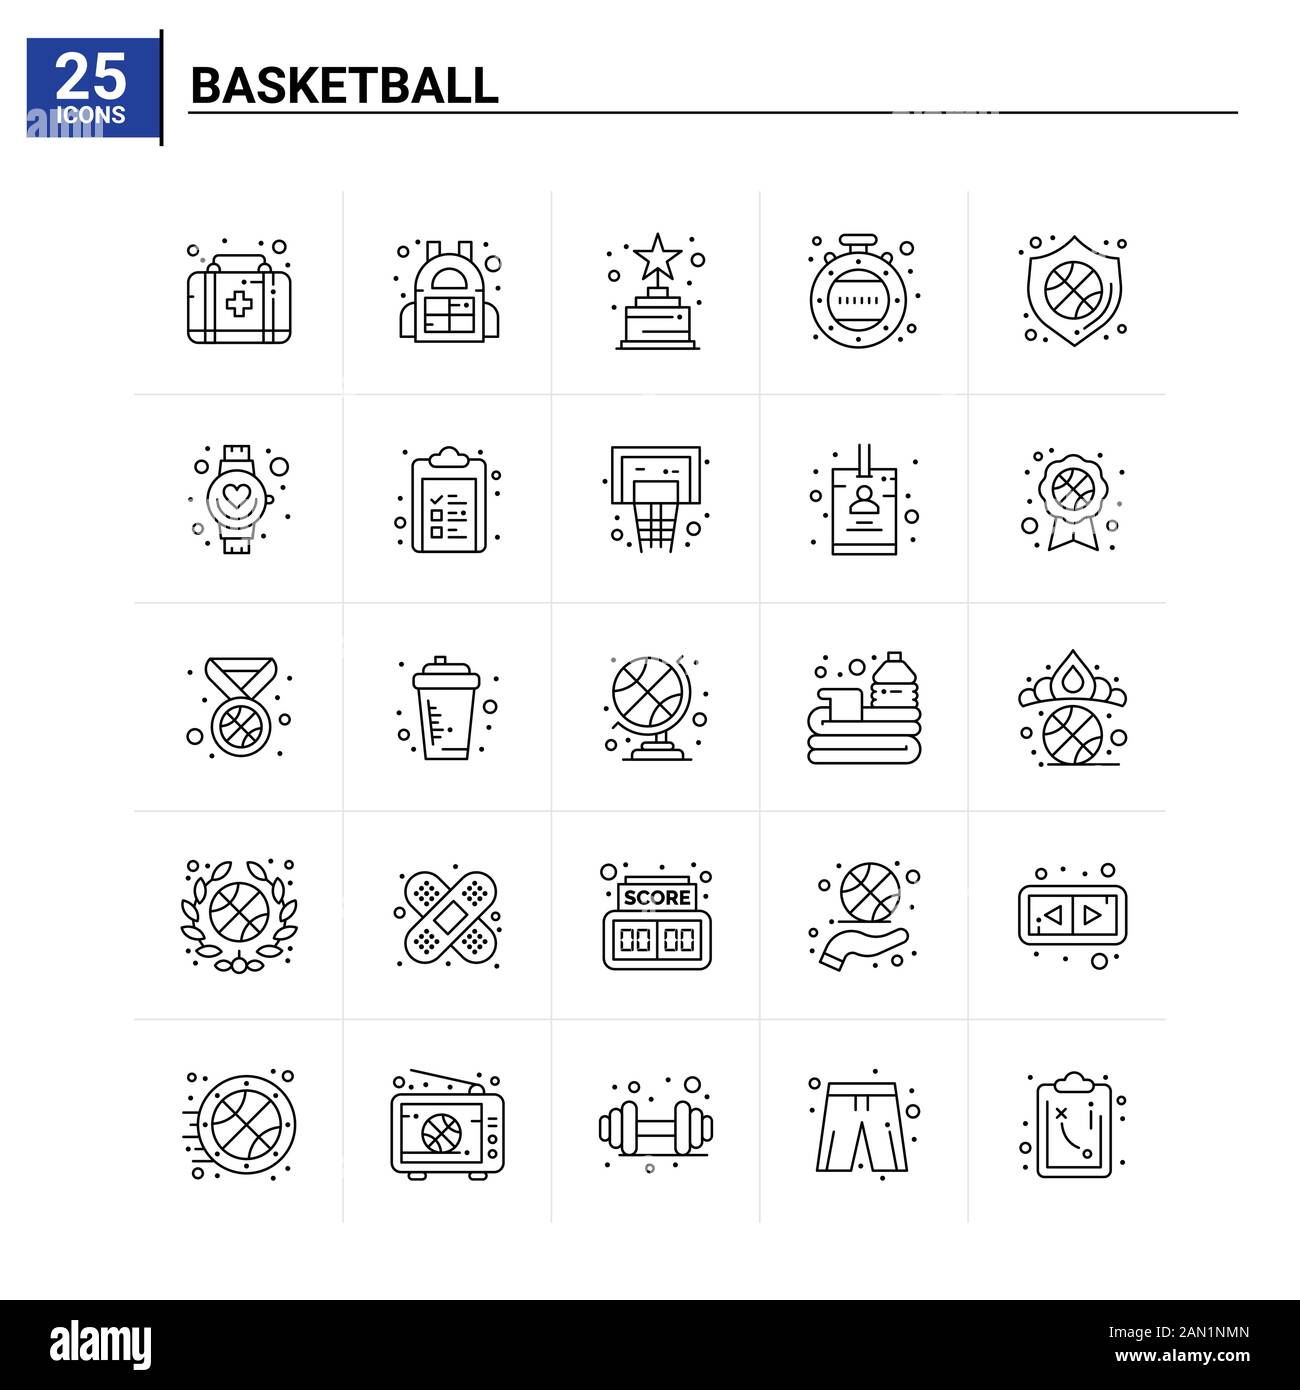 25 Basketball icon set. vector background Stock Vector